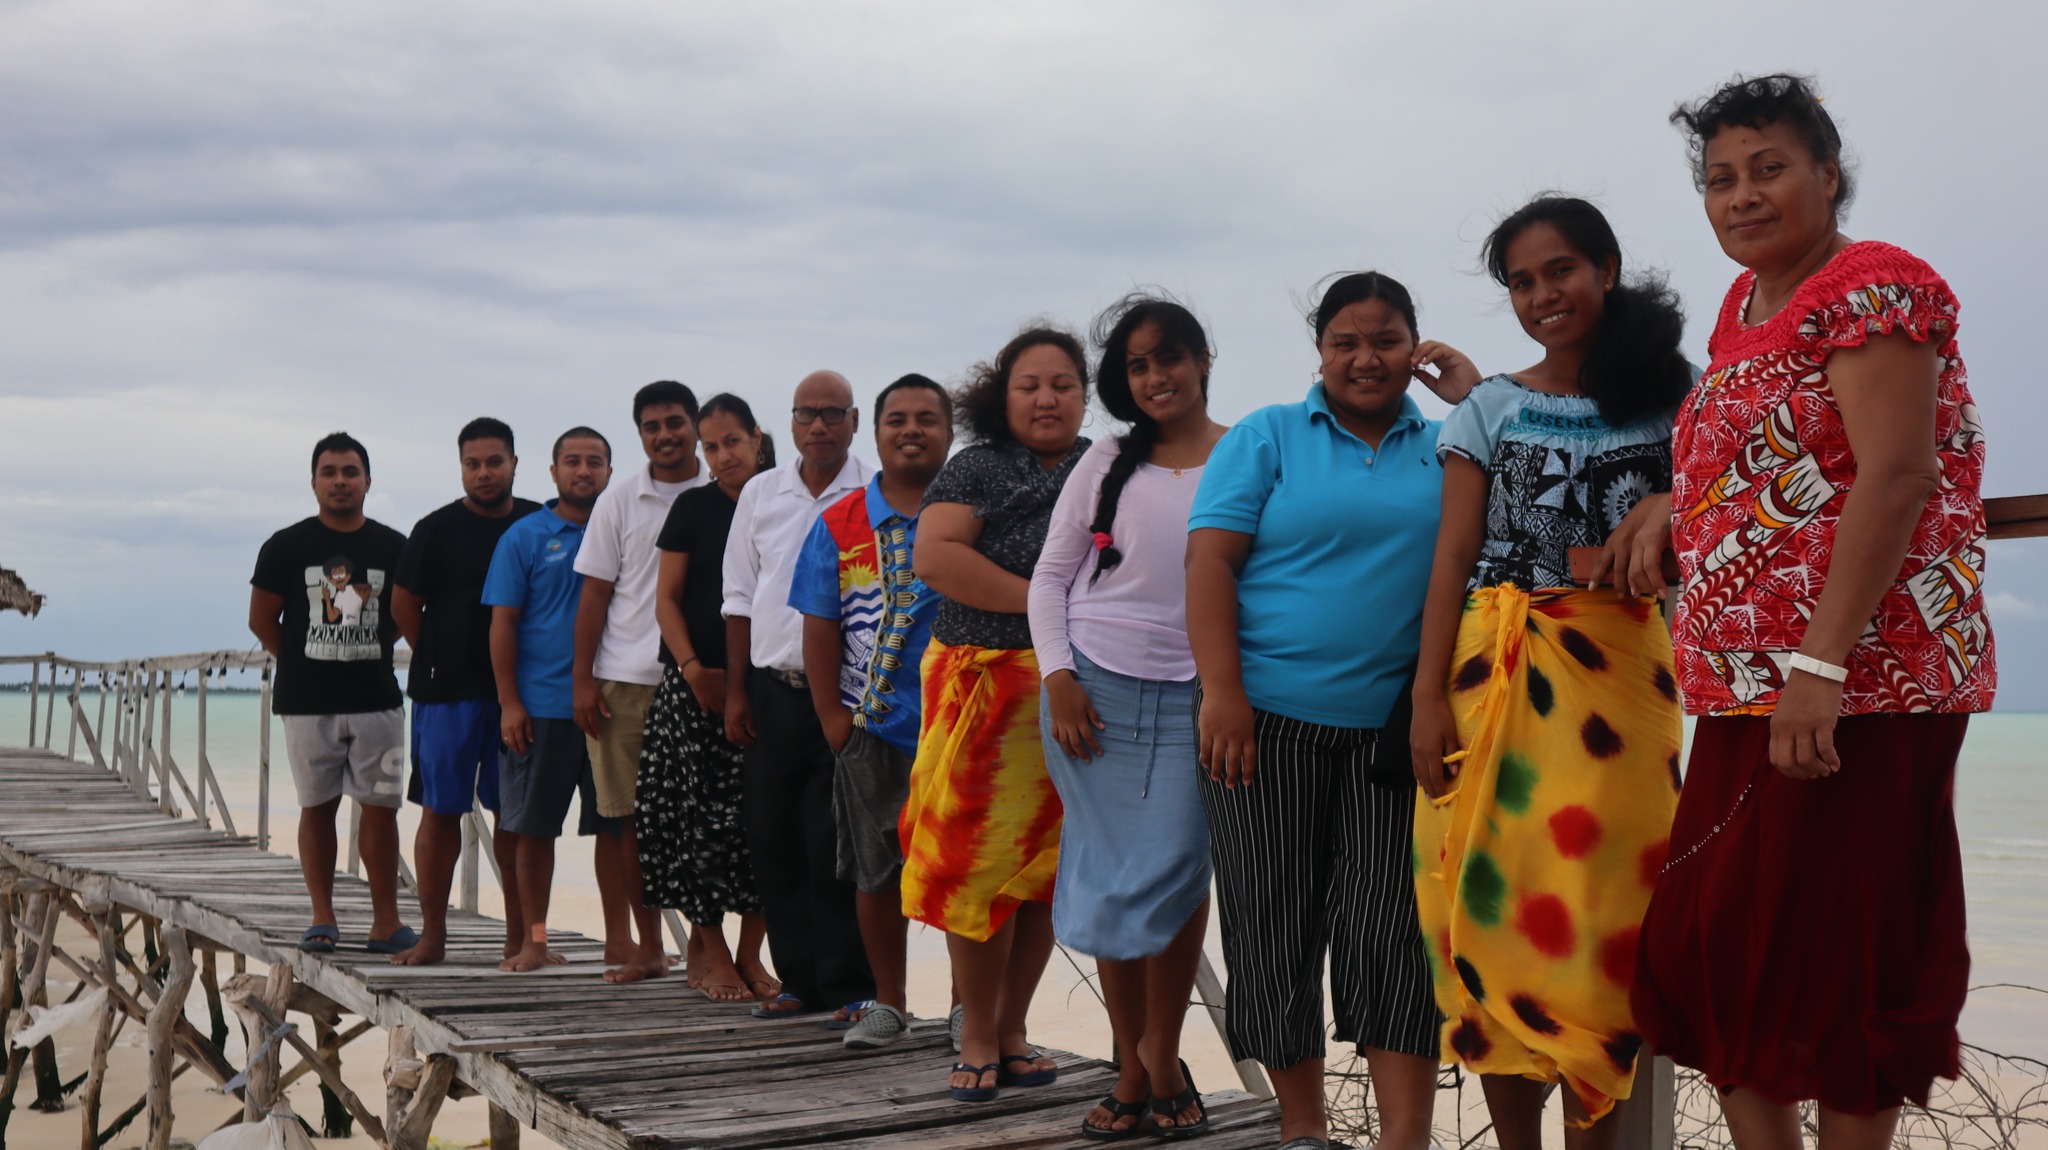 The HRWG of MFMRD held its second retreat at Tabontekeeke Resort in Abatao, North Tarawa